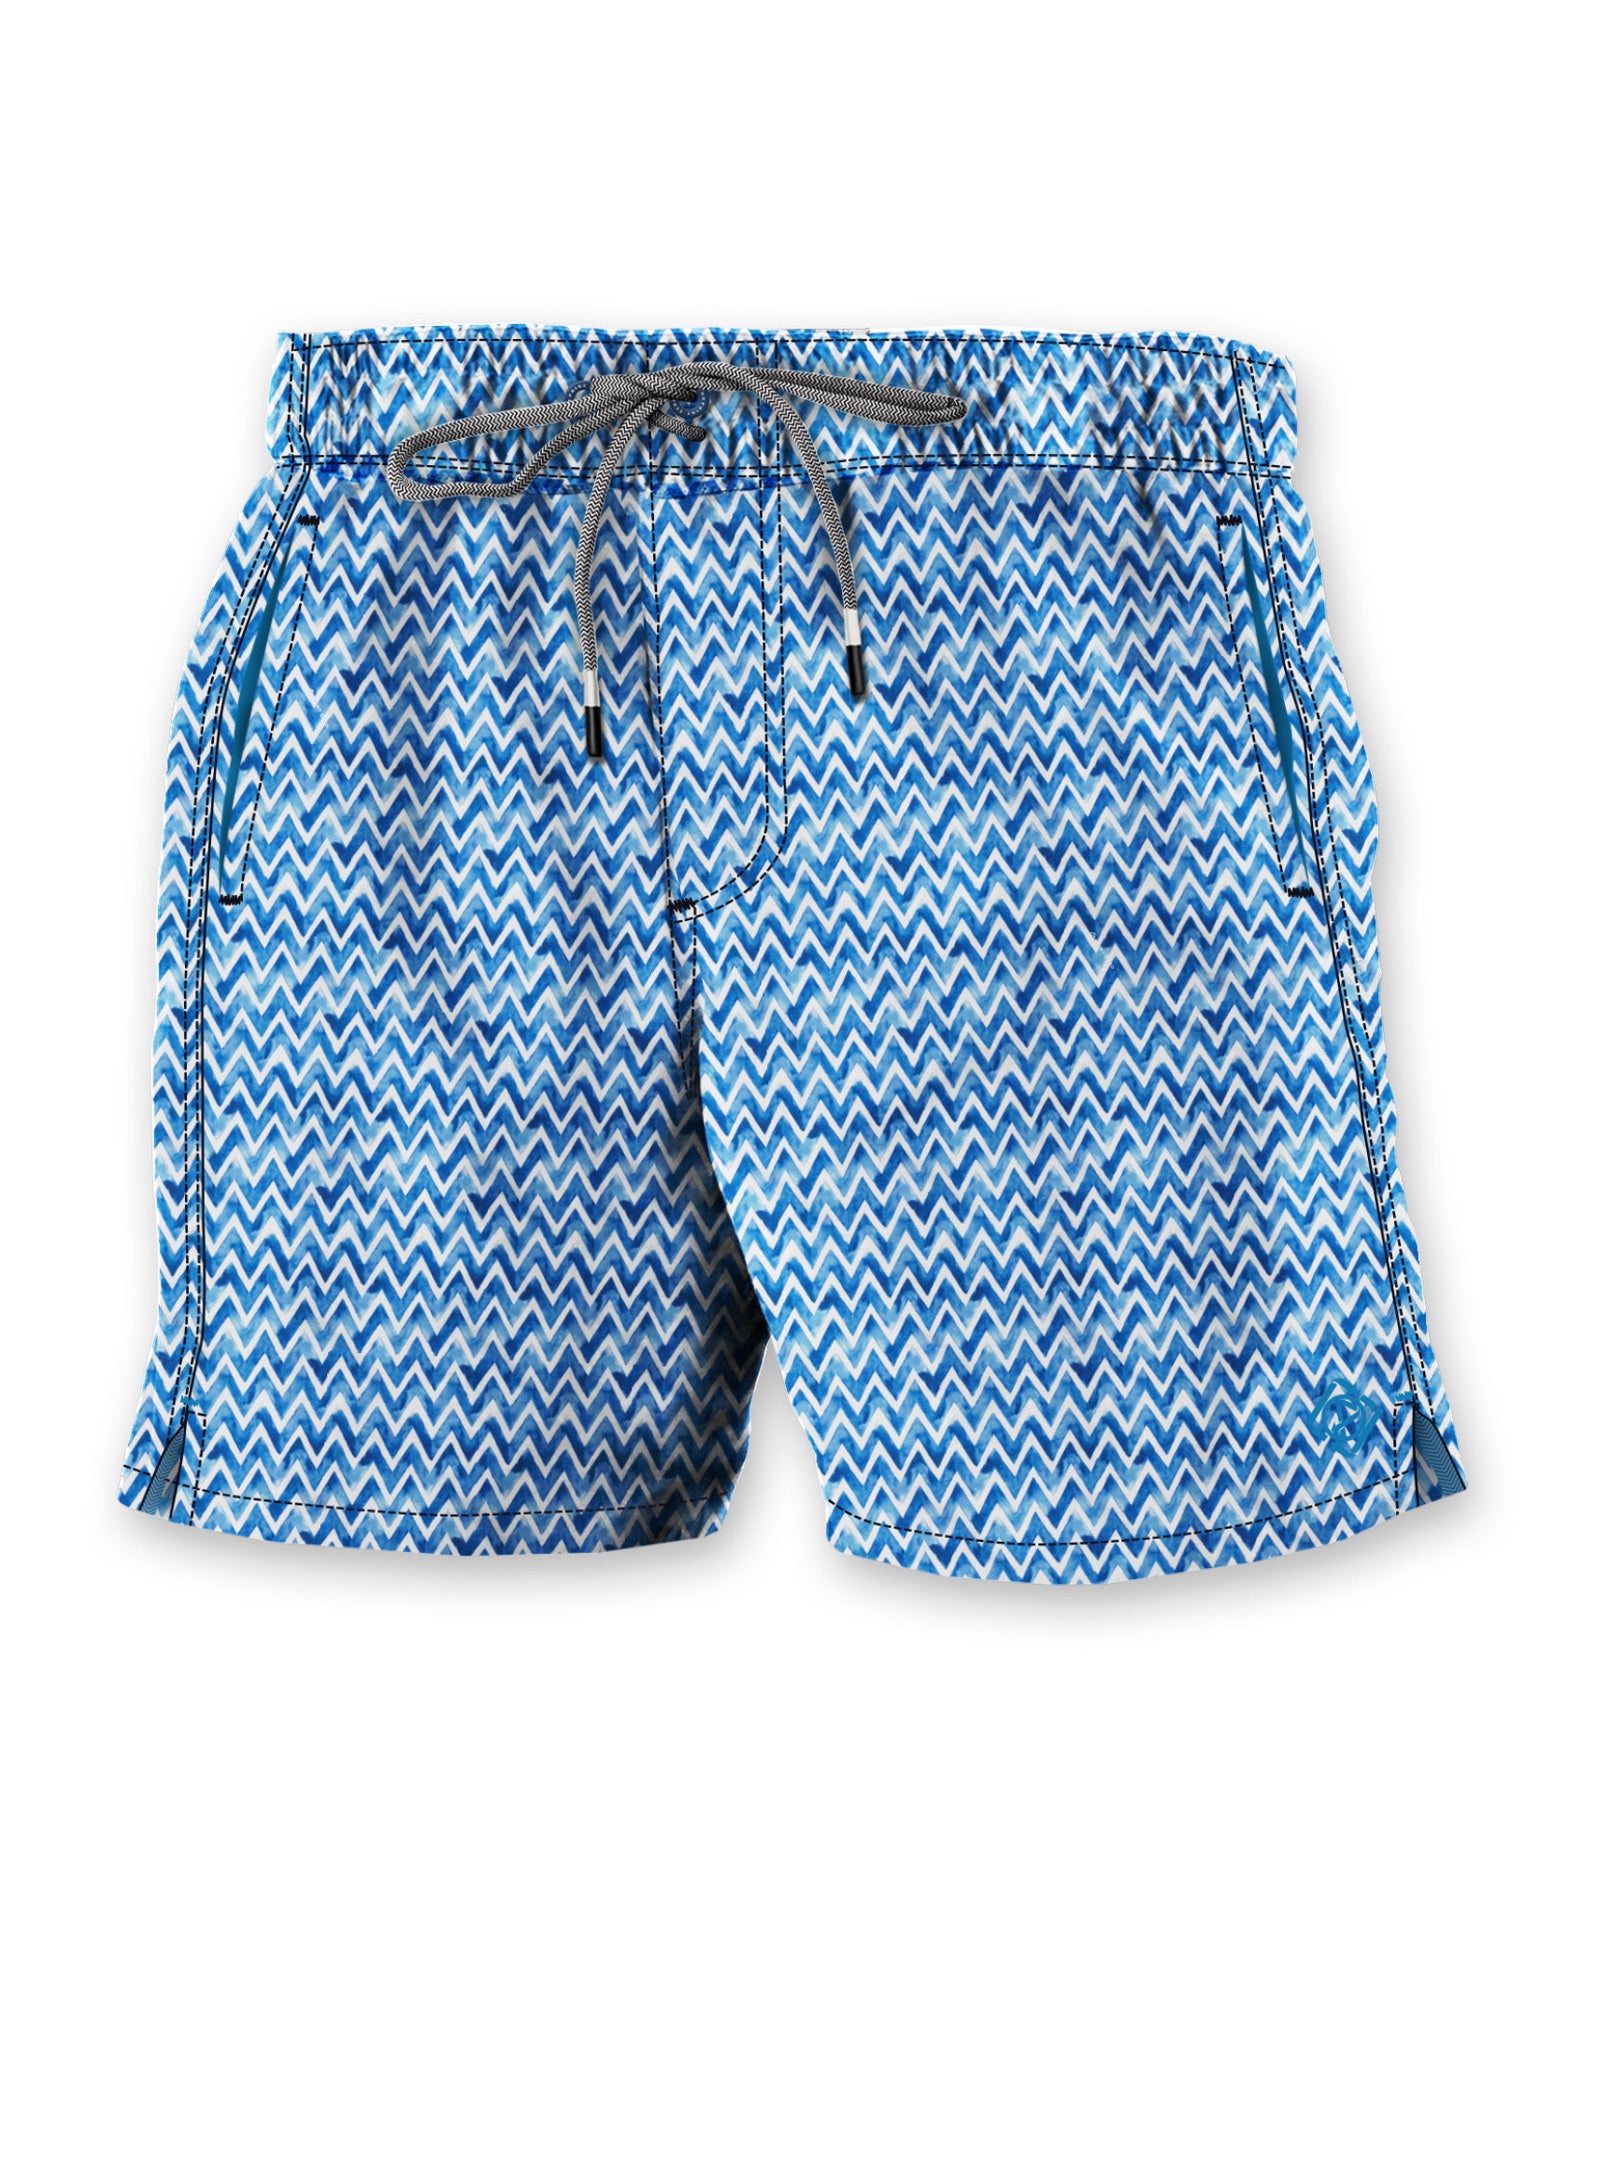 ZAYLE |Wavy Print Swim shorts with elastic waistband